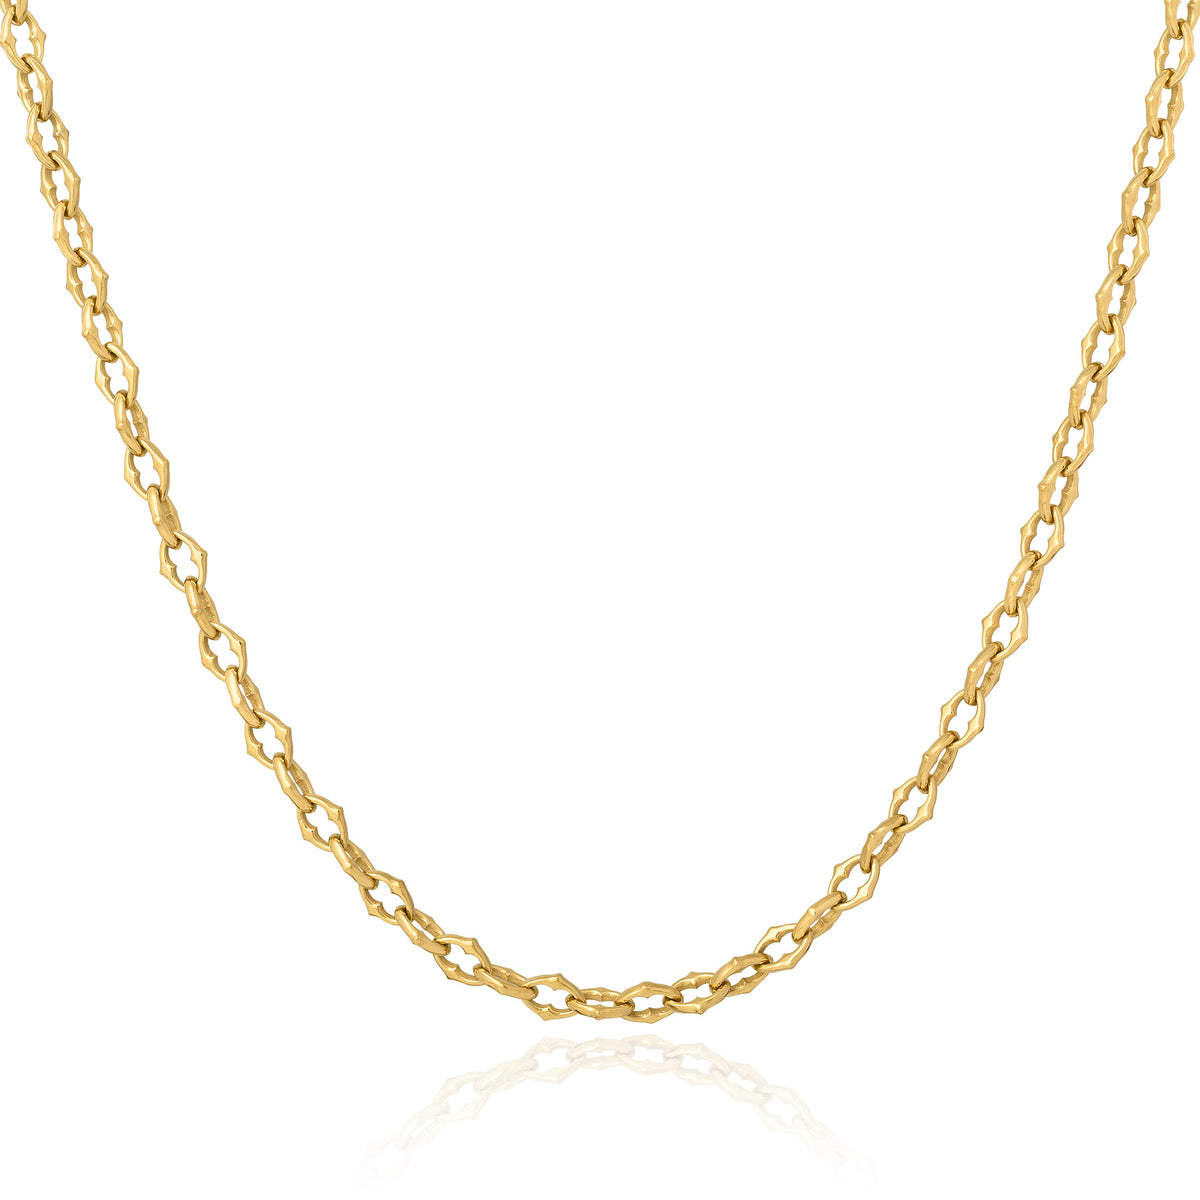 Golden spikey chain link necklace